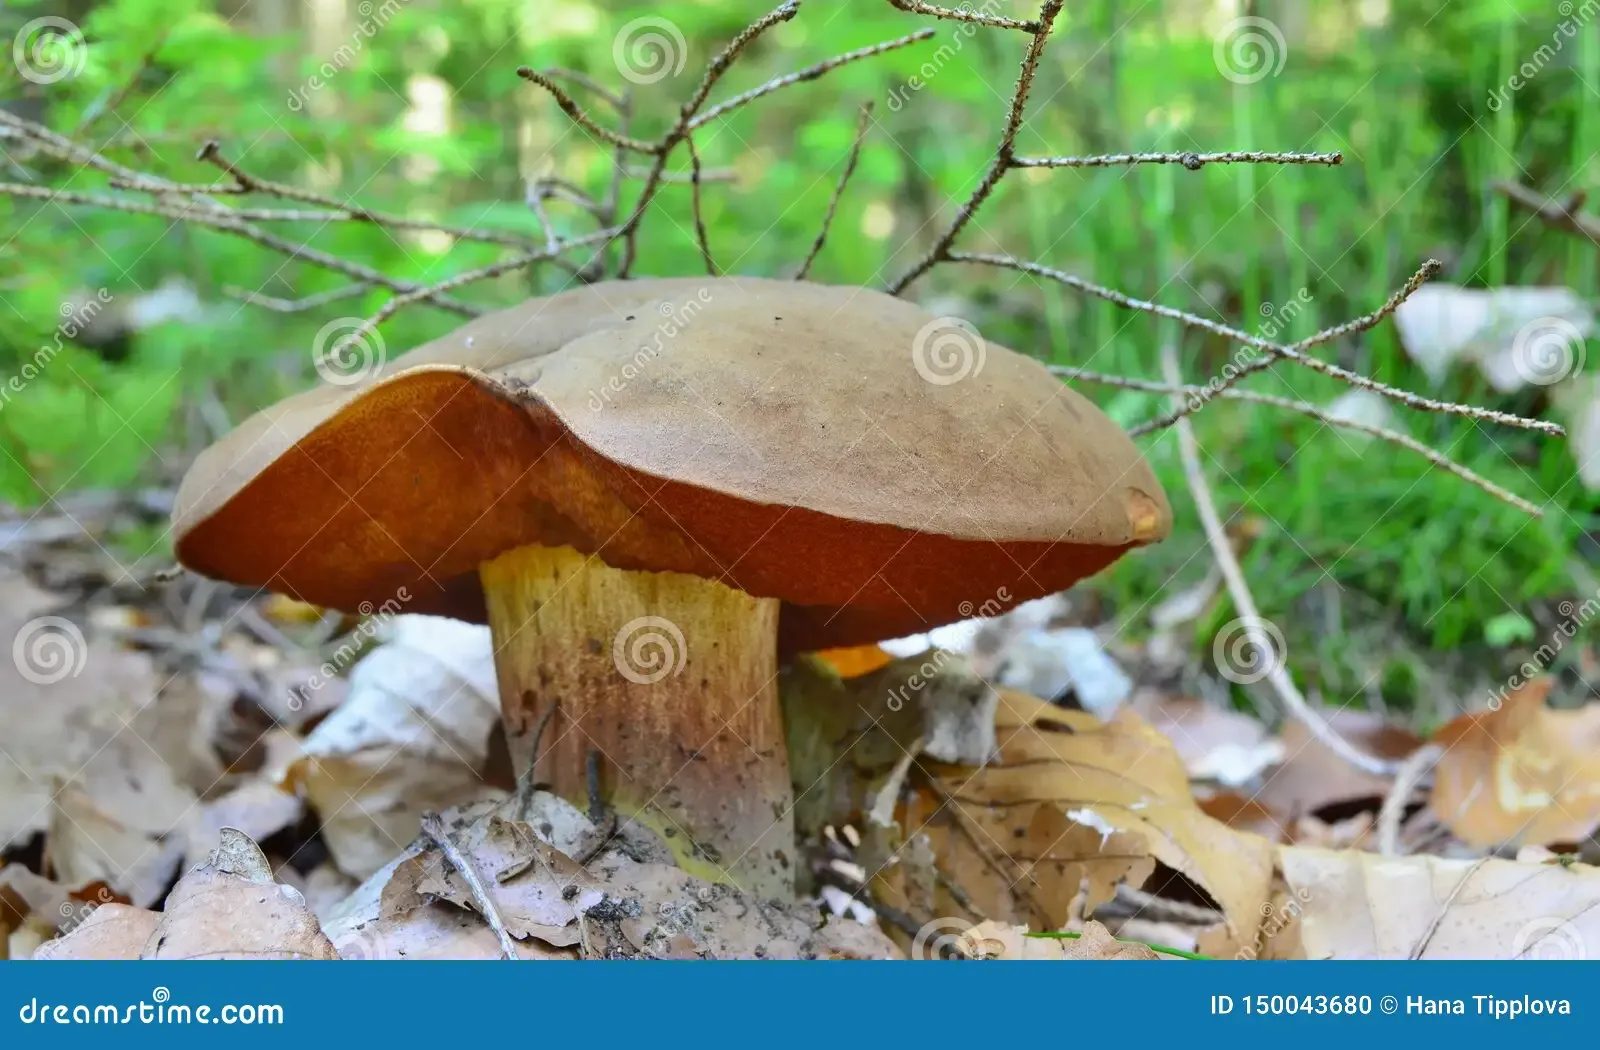 view-autumn-mushrooms-southern-bohemia-czech-republic-150043680.jpg